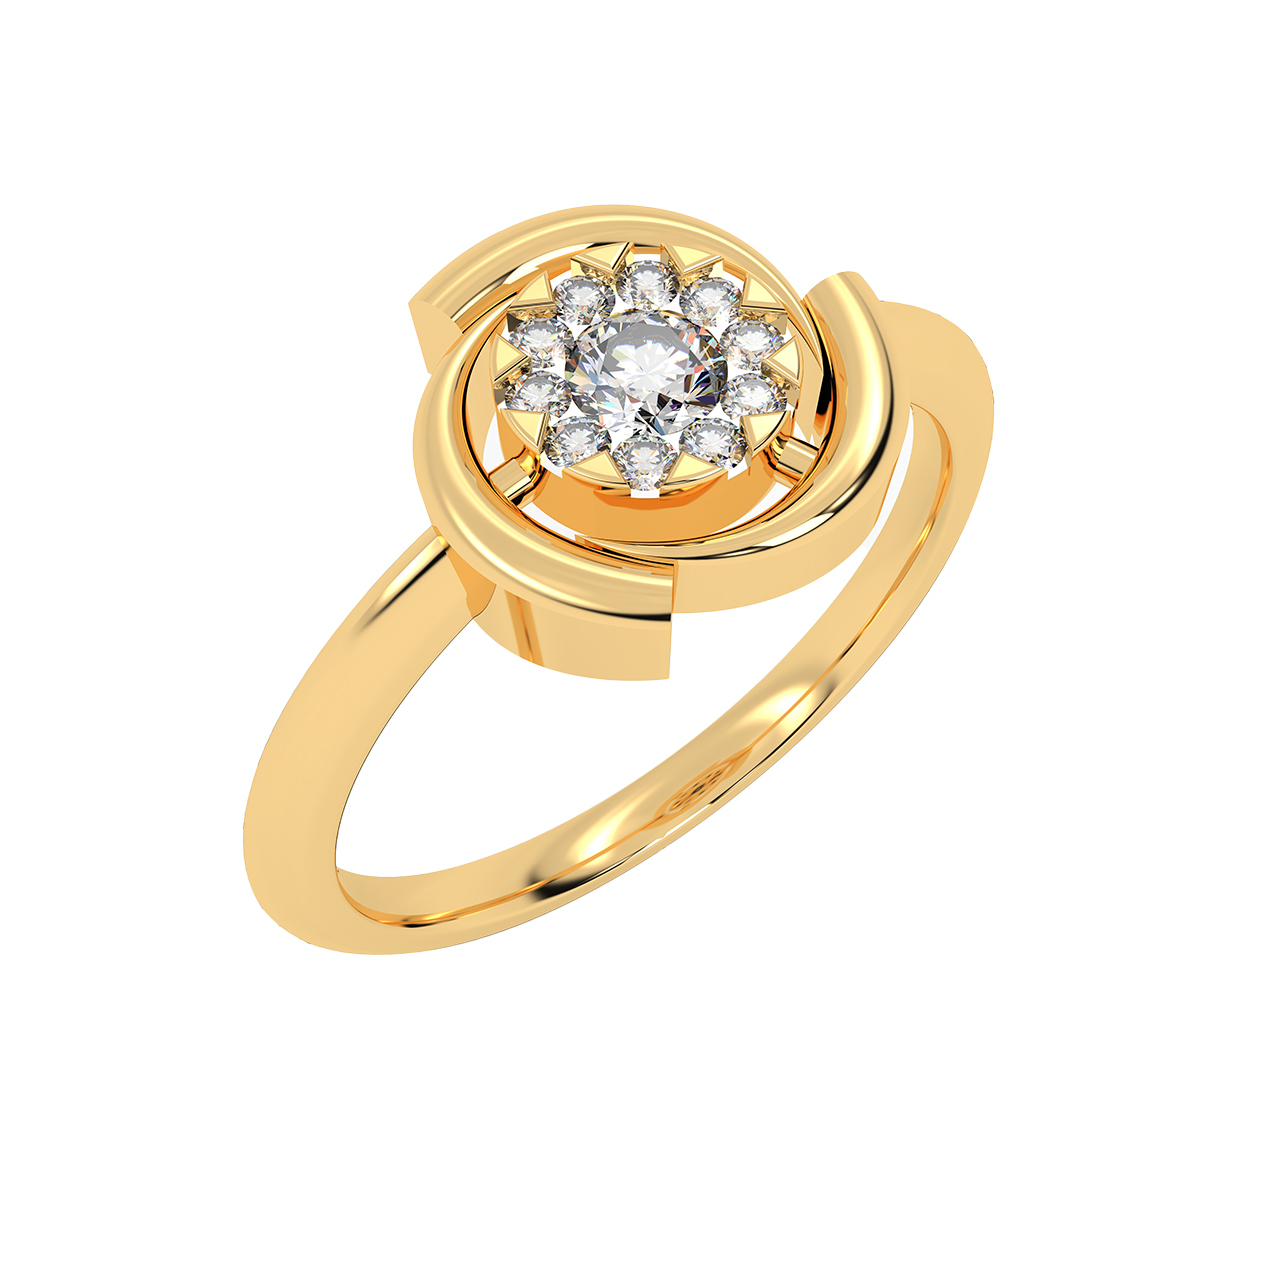 Whirl Design Diamond Ring